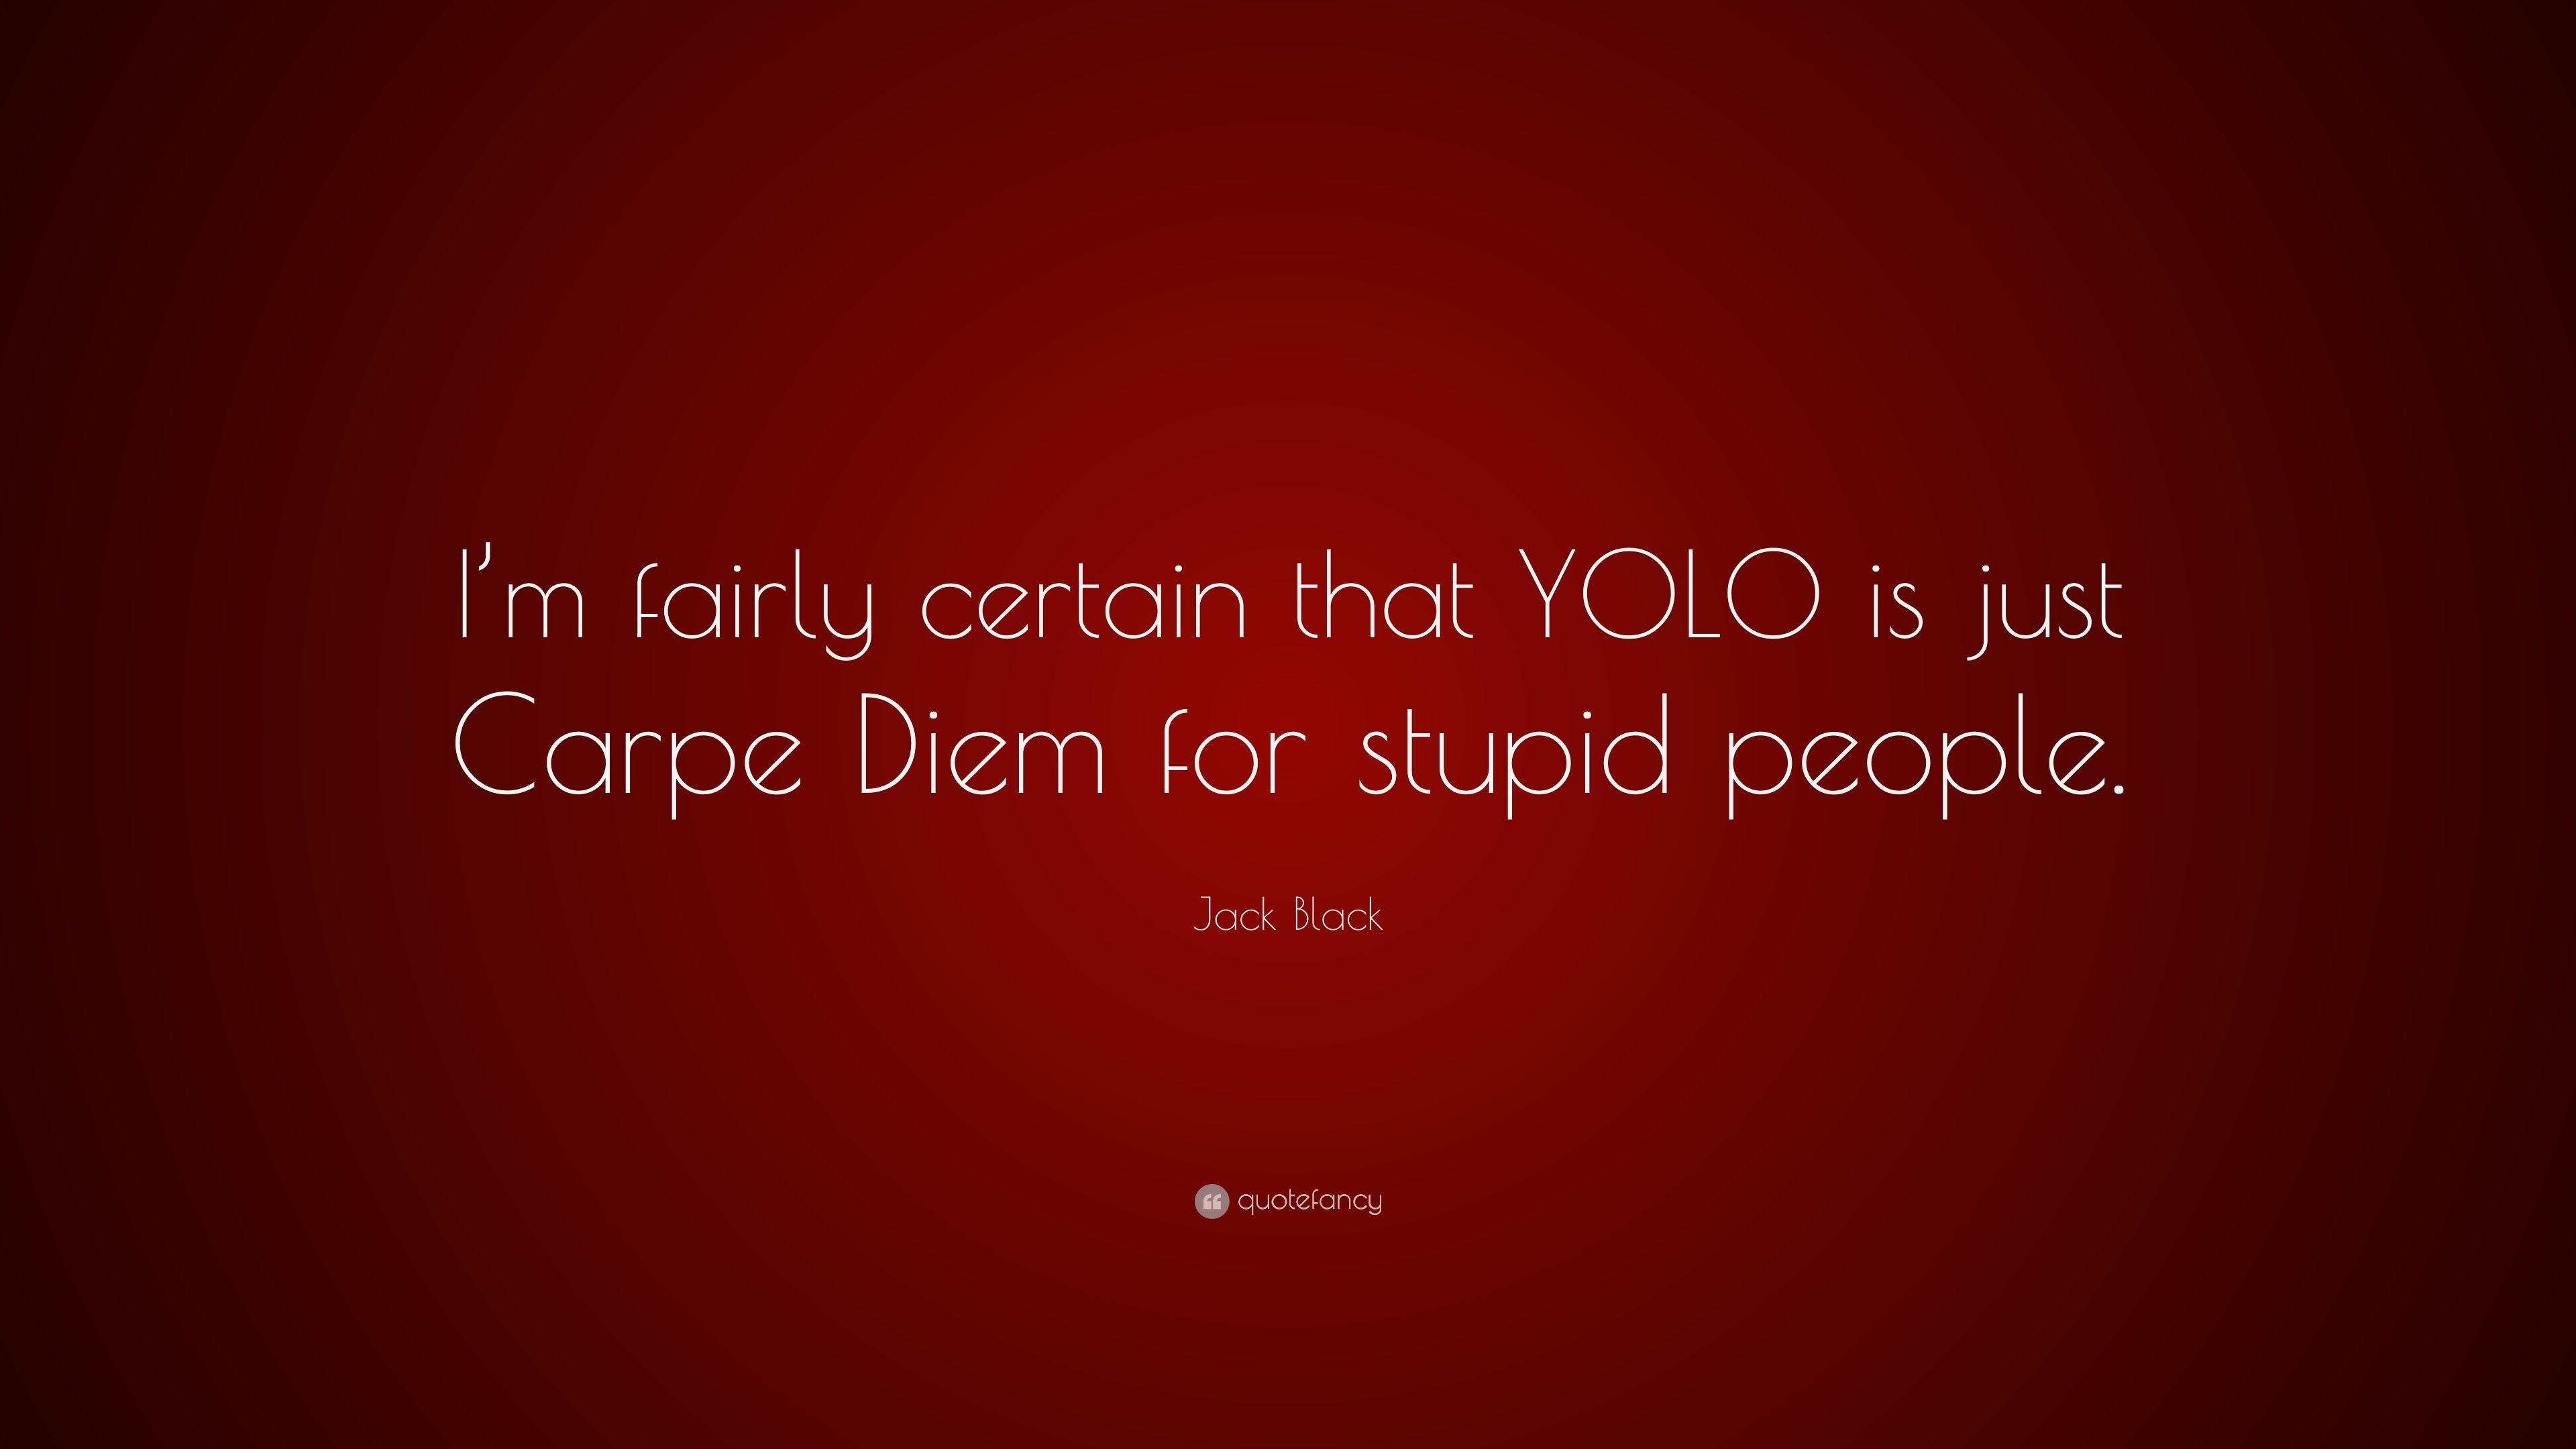 Jack Black Quote: “I'm fairly certain that YOLO is just Carpe Diem